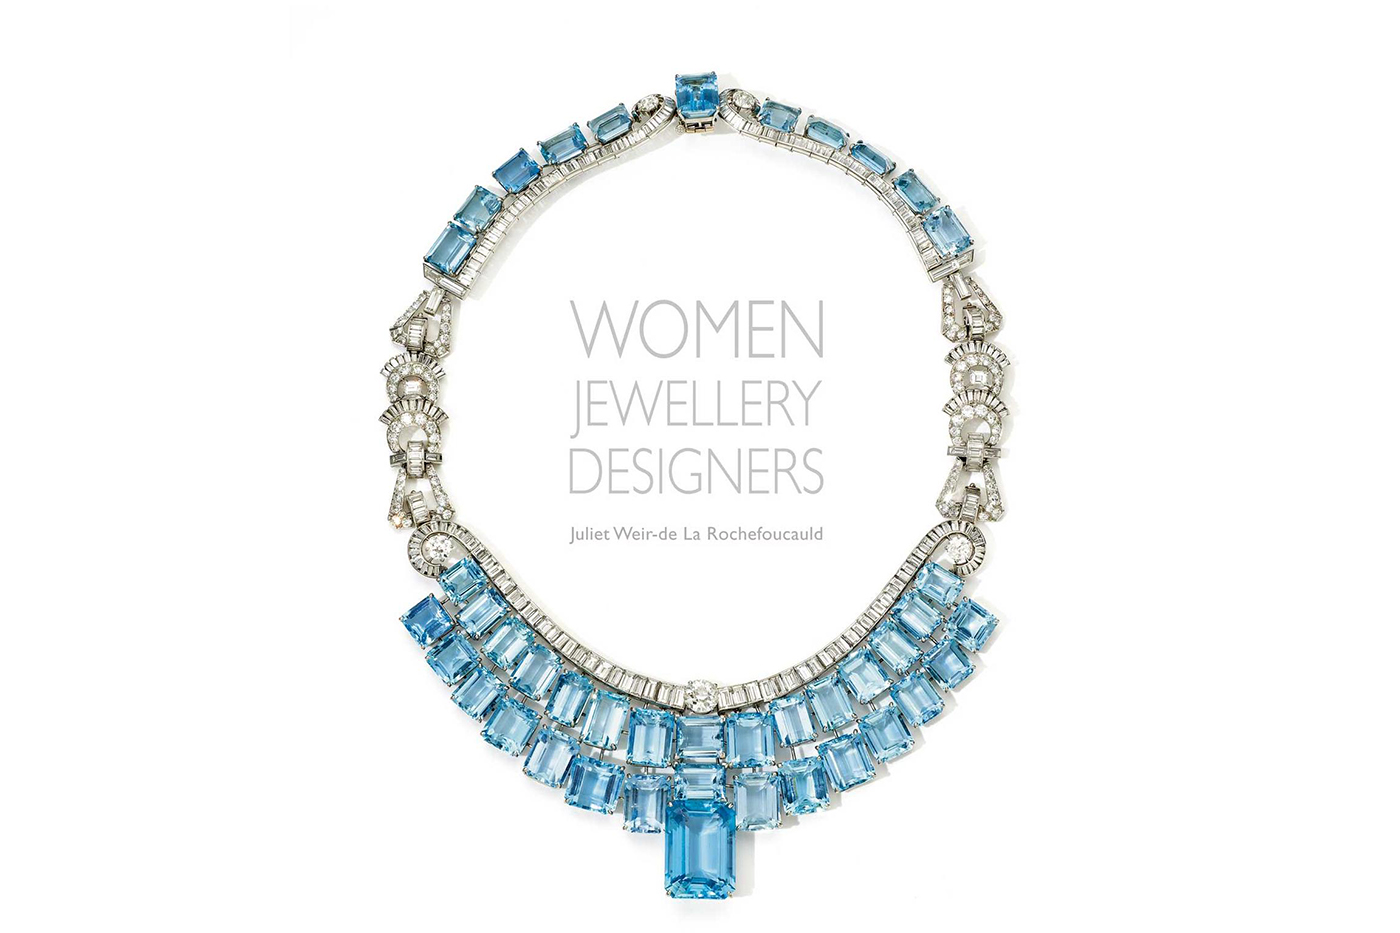 Cover of 'Women Jewellery Designers' by Juliet Weir-de La Rochefoucauld featuring aquamarine and diamond necklace by Olga Tritt 